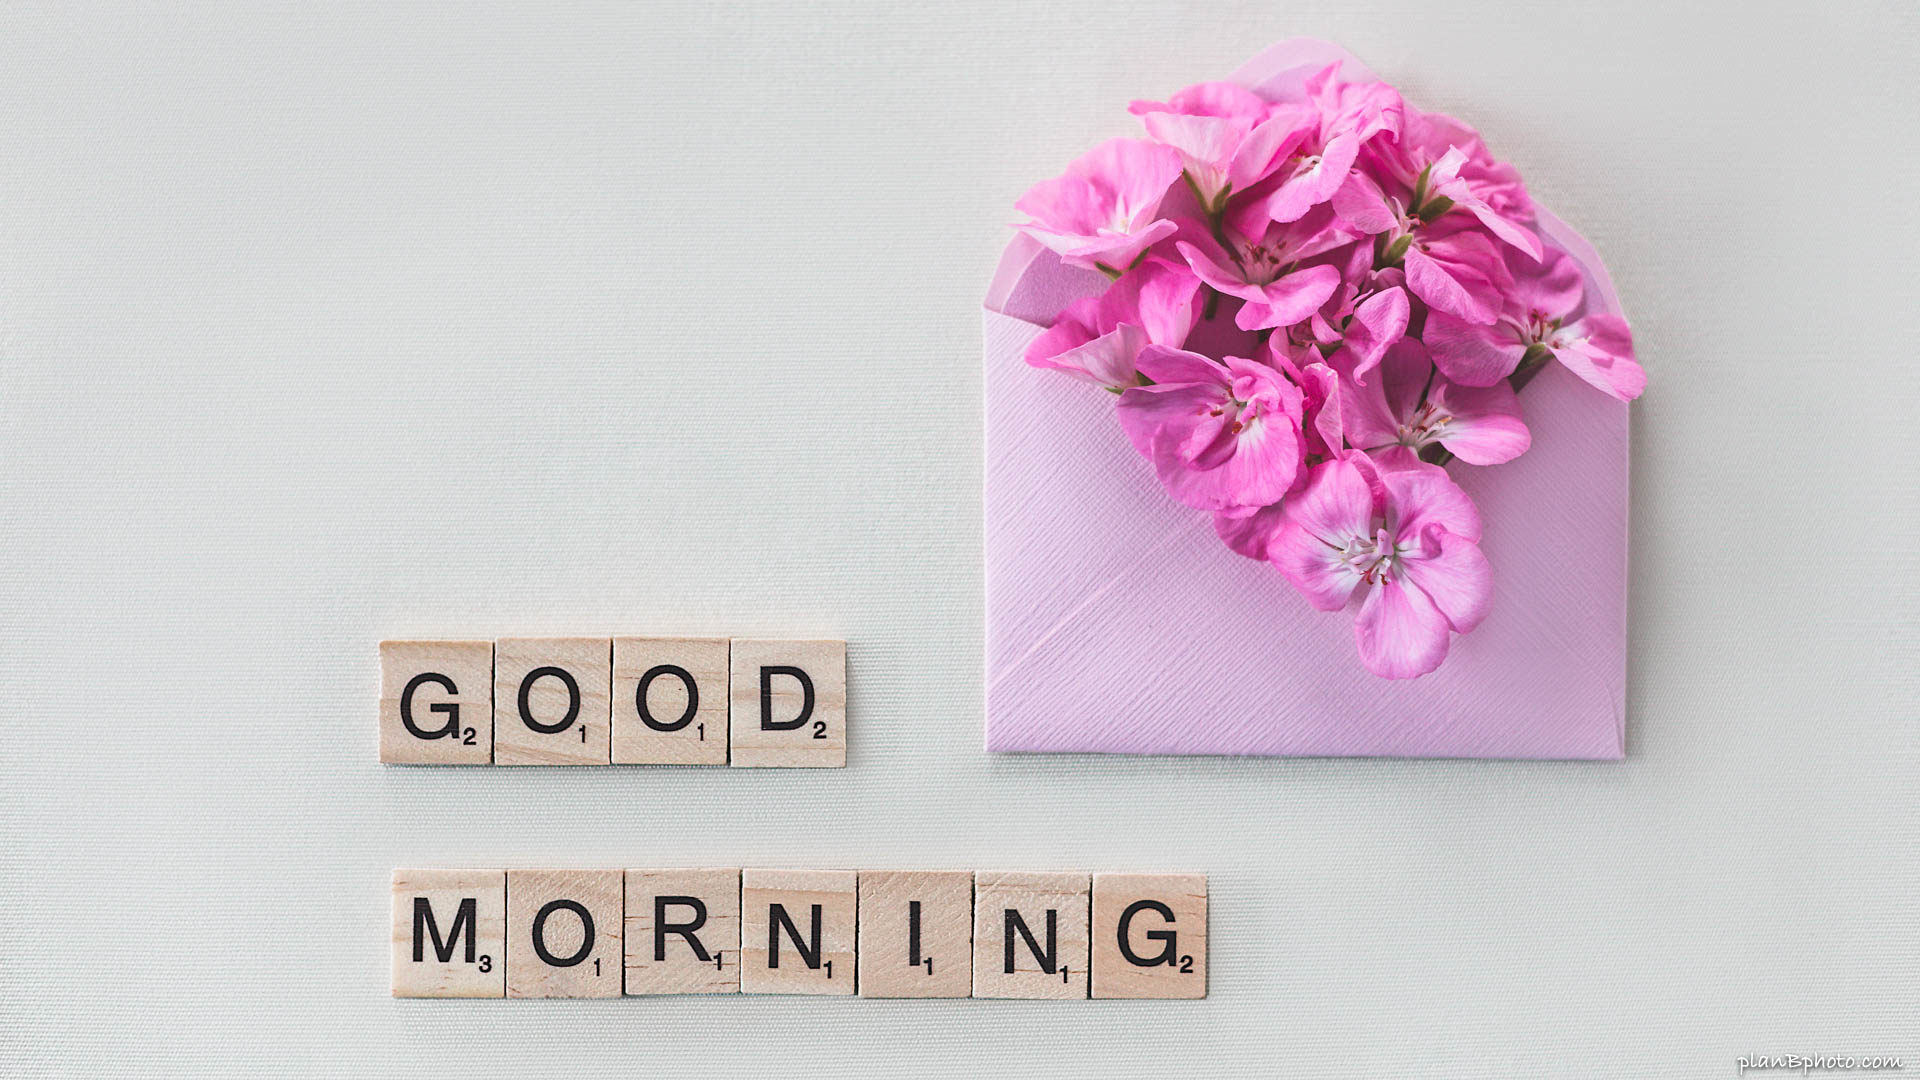 Good morning flowers in pink envelope